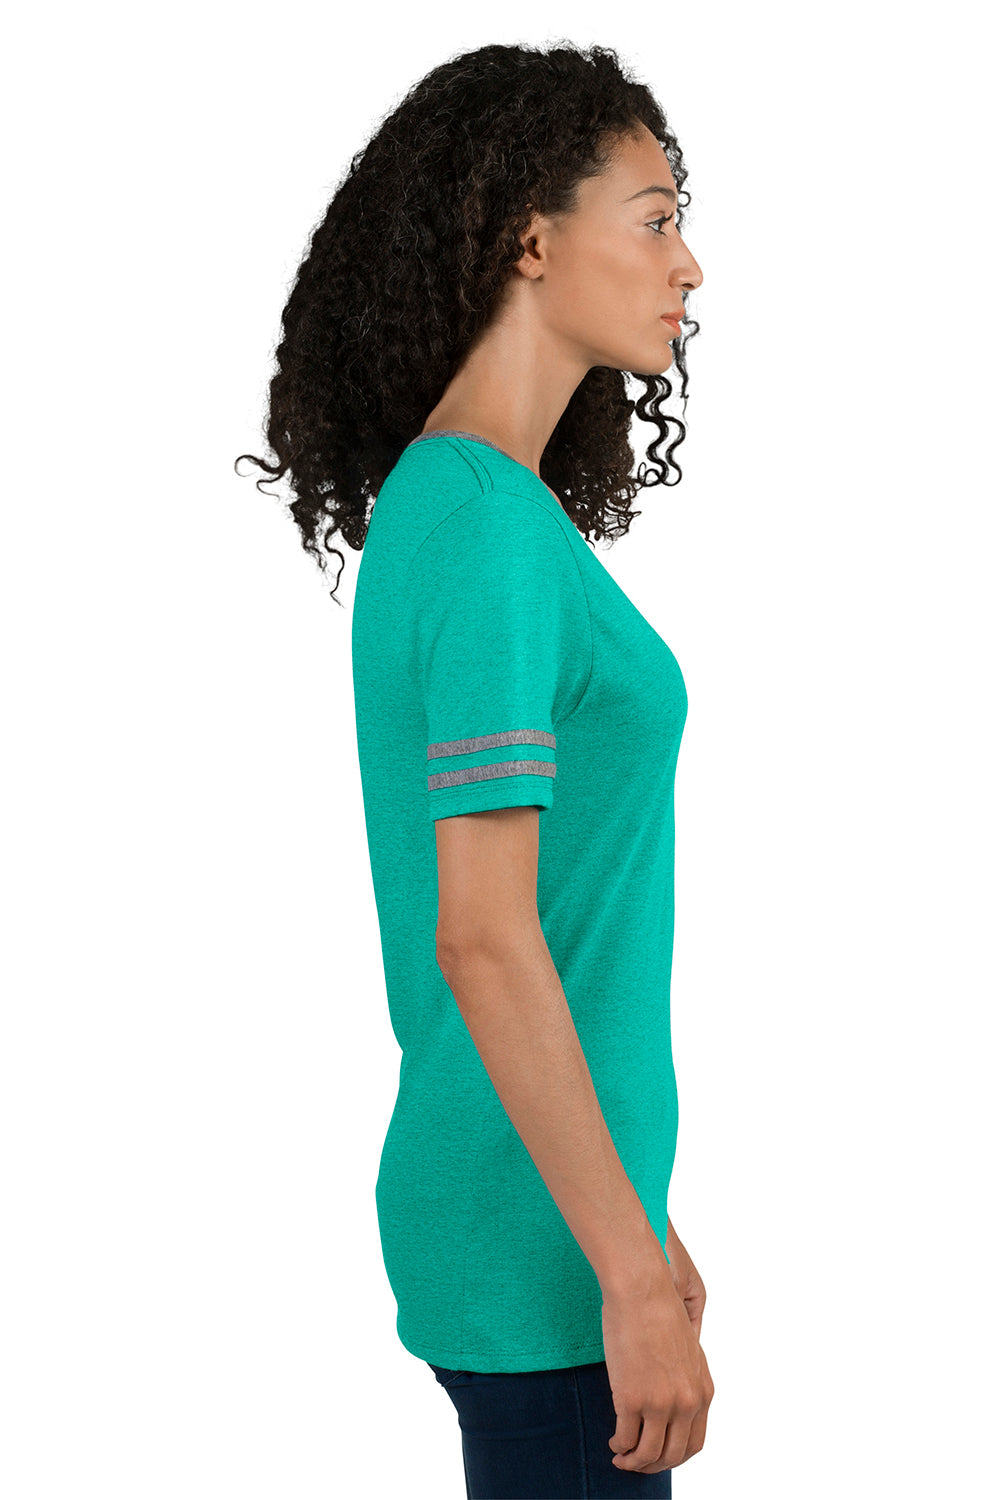 Jerzees 602WVR Womens Varsity Ringer Short Sleeve V-Neck T-Shirt Heather Mint Green/Oxford Grey Side